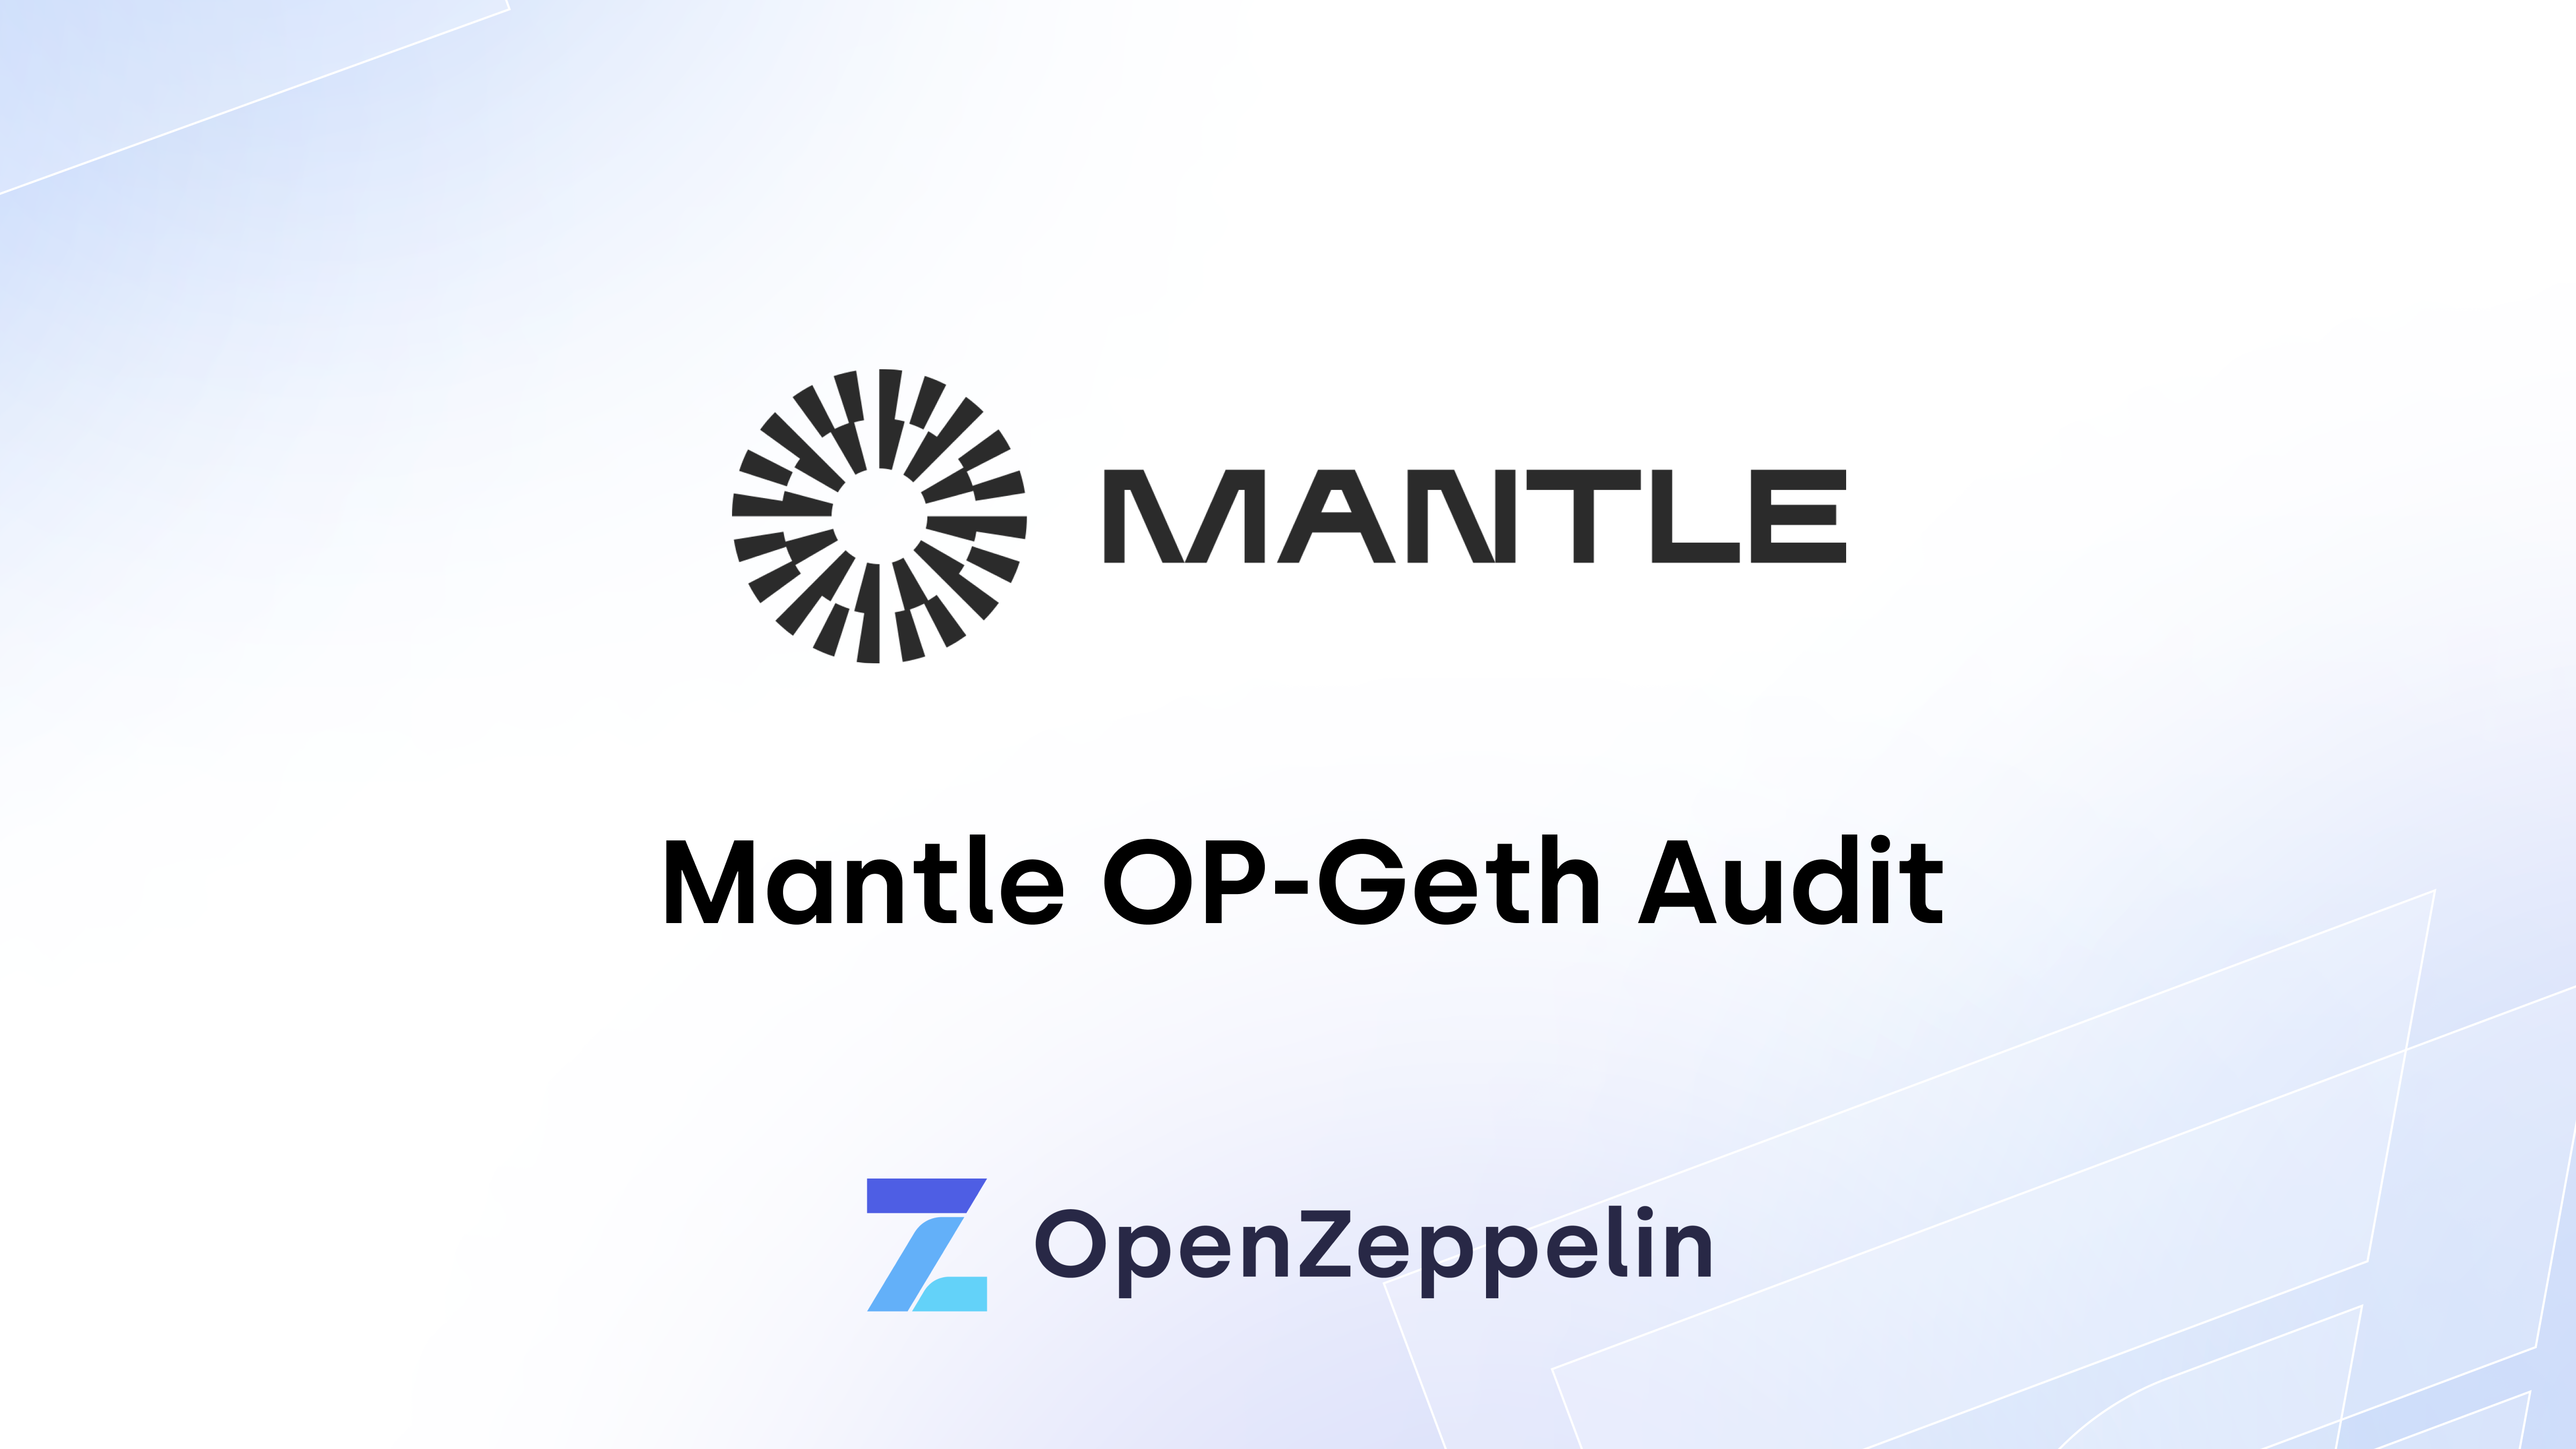 Mantle OP-Geth Audit Featured Image